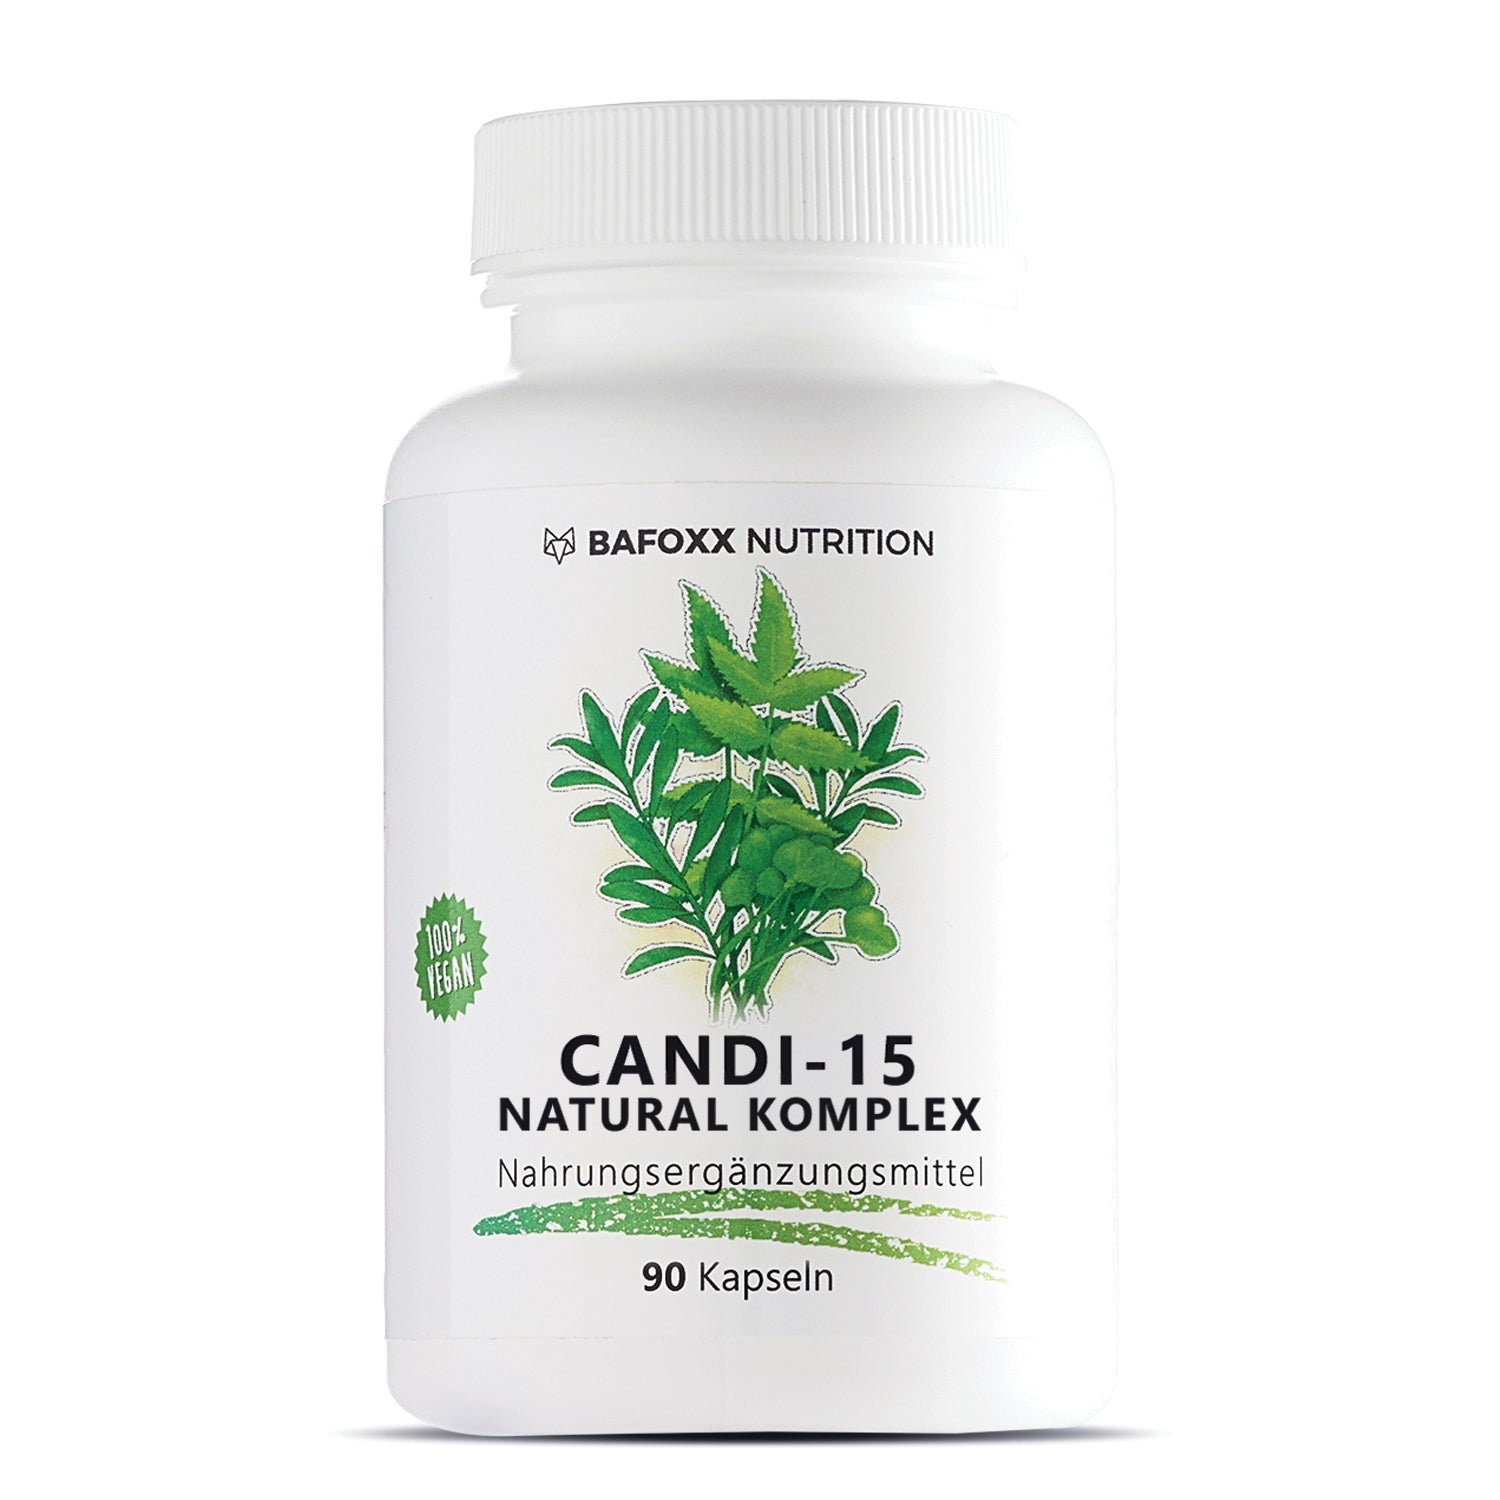 Candi-15 Natural Komplex